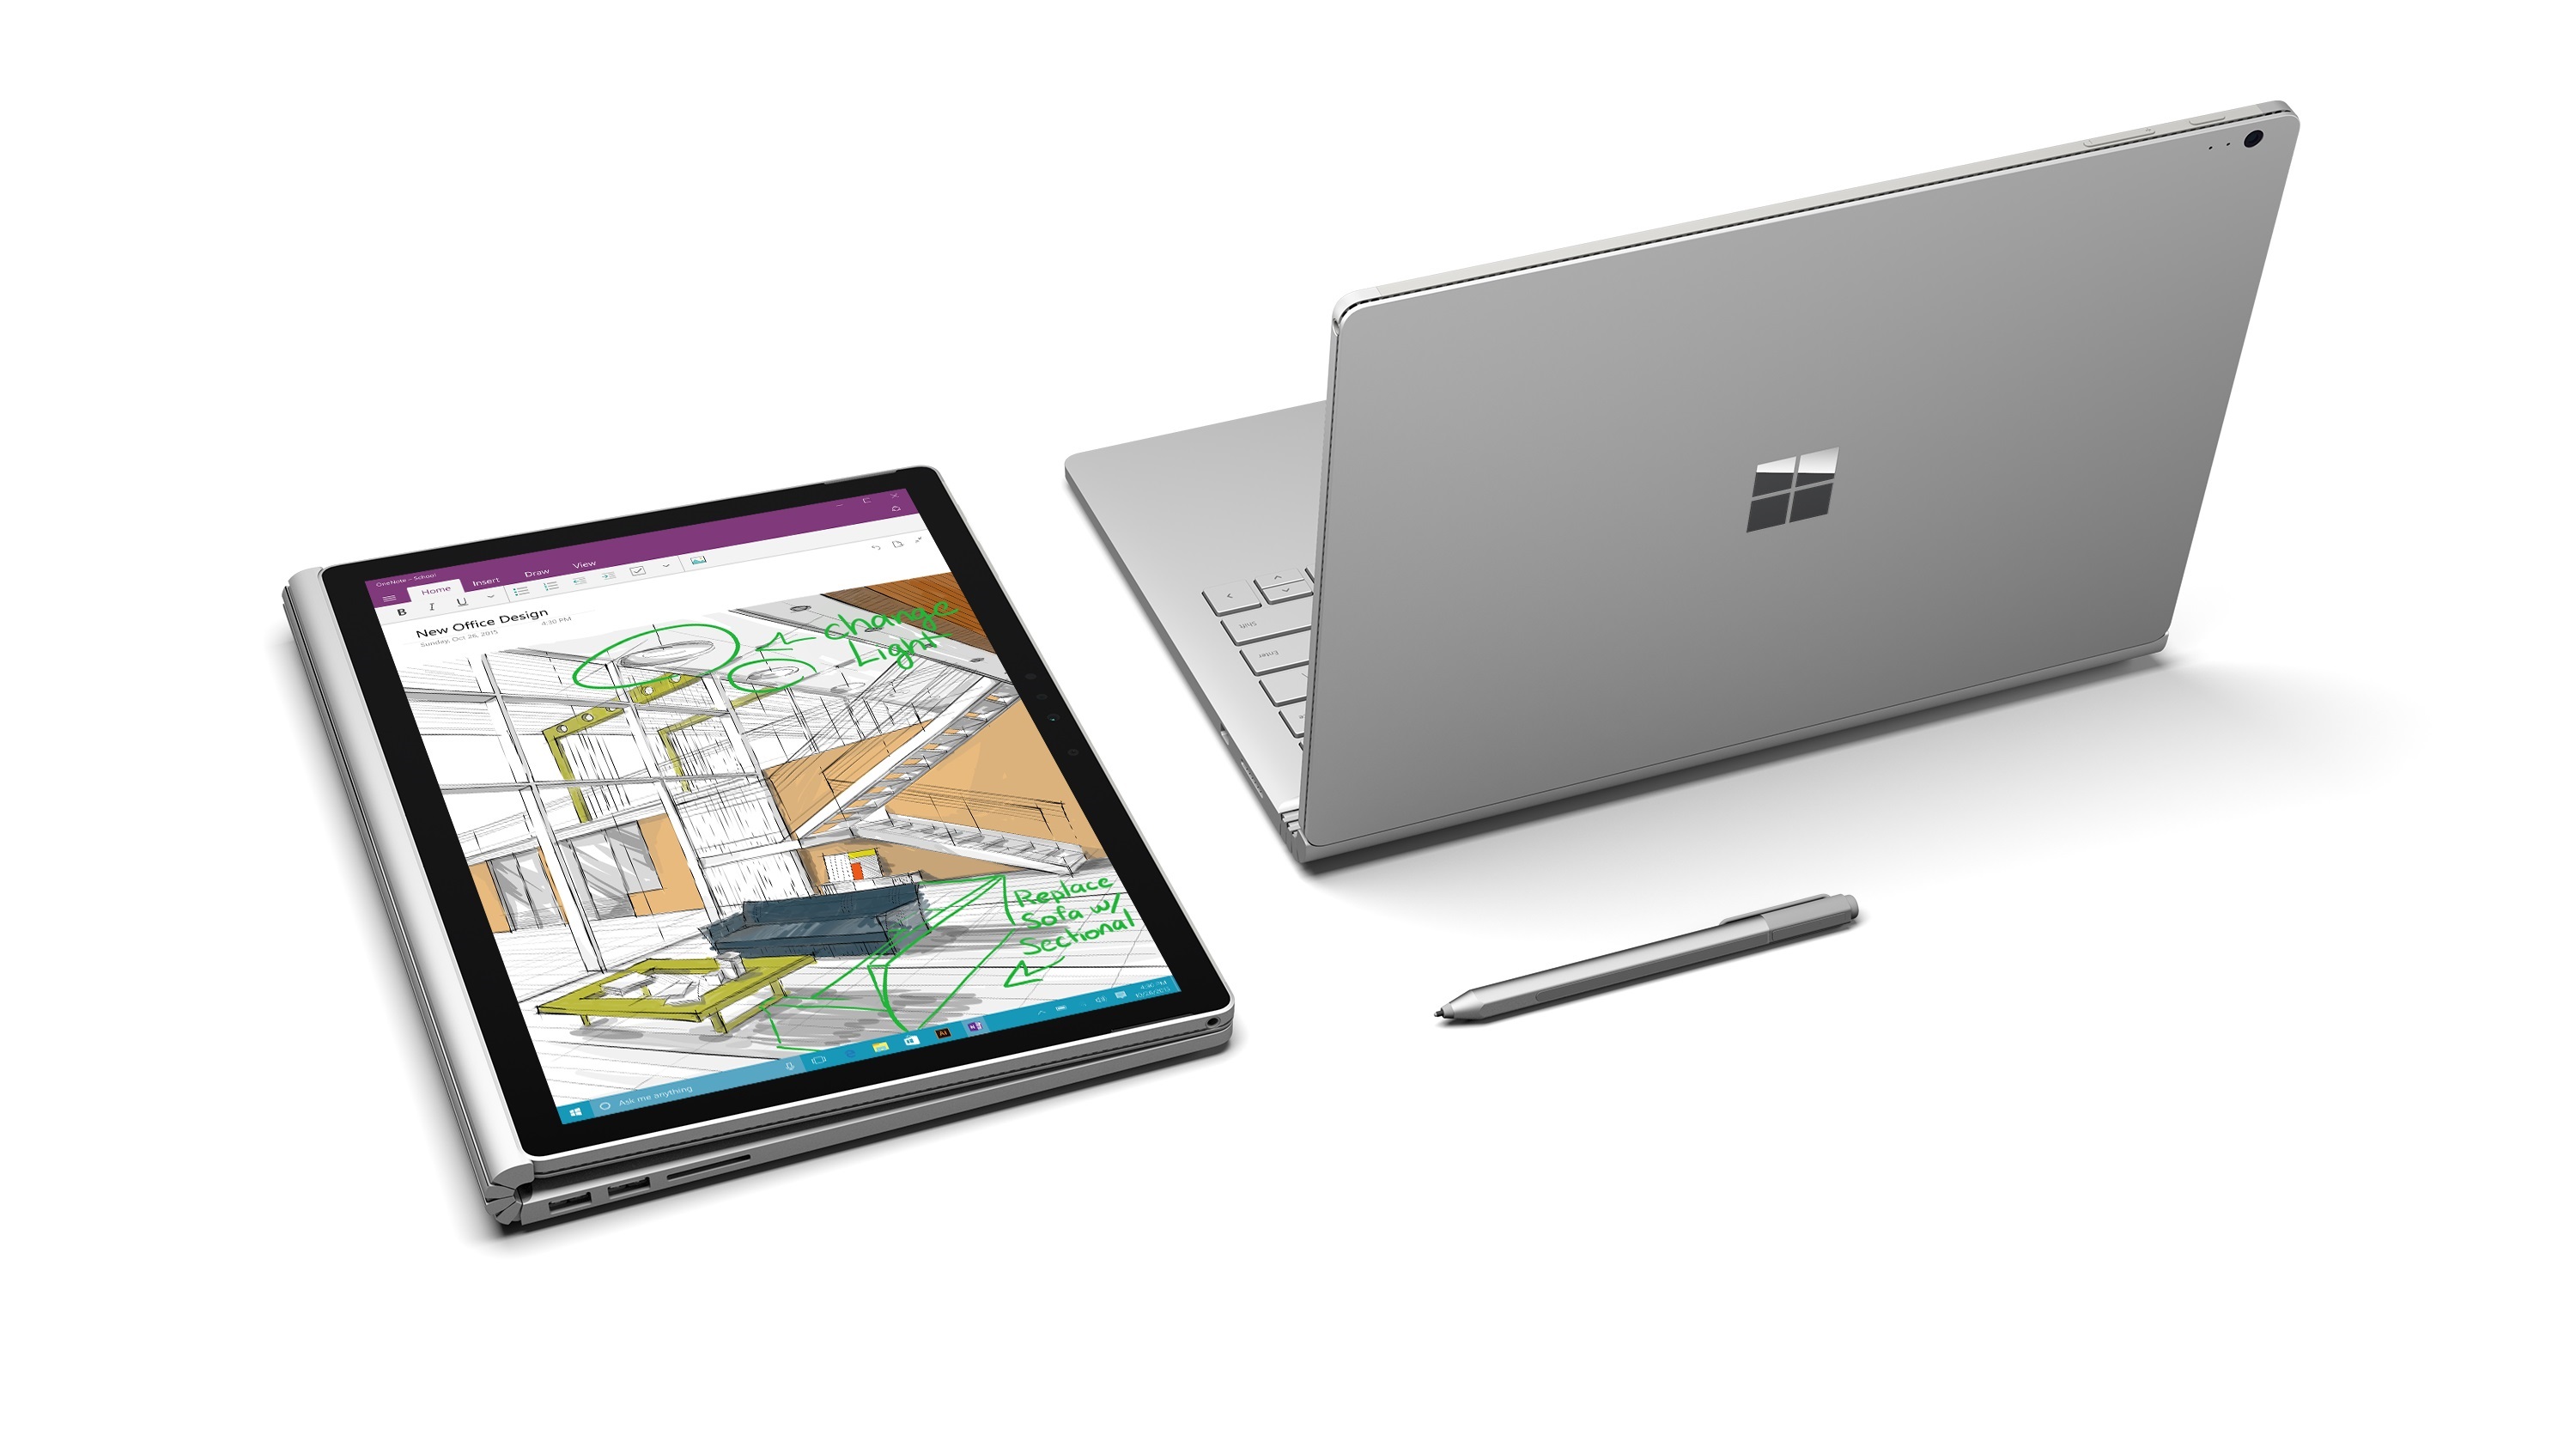 Surface Book 3 (15 Inches) 512GB/ Intel Core i7-1065G7/ 32GB RAM/ NVIDIA GeForce GTX 1650 Max-Q  4GB GDDR5